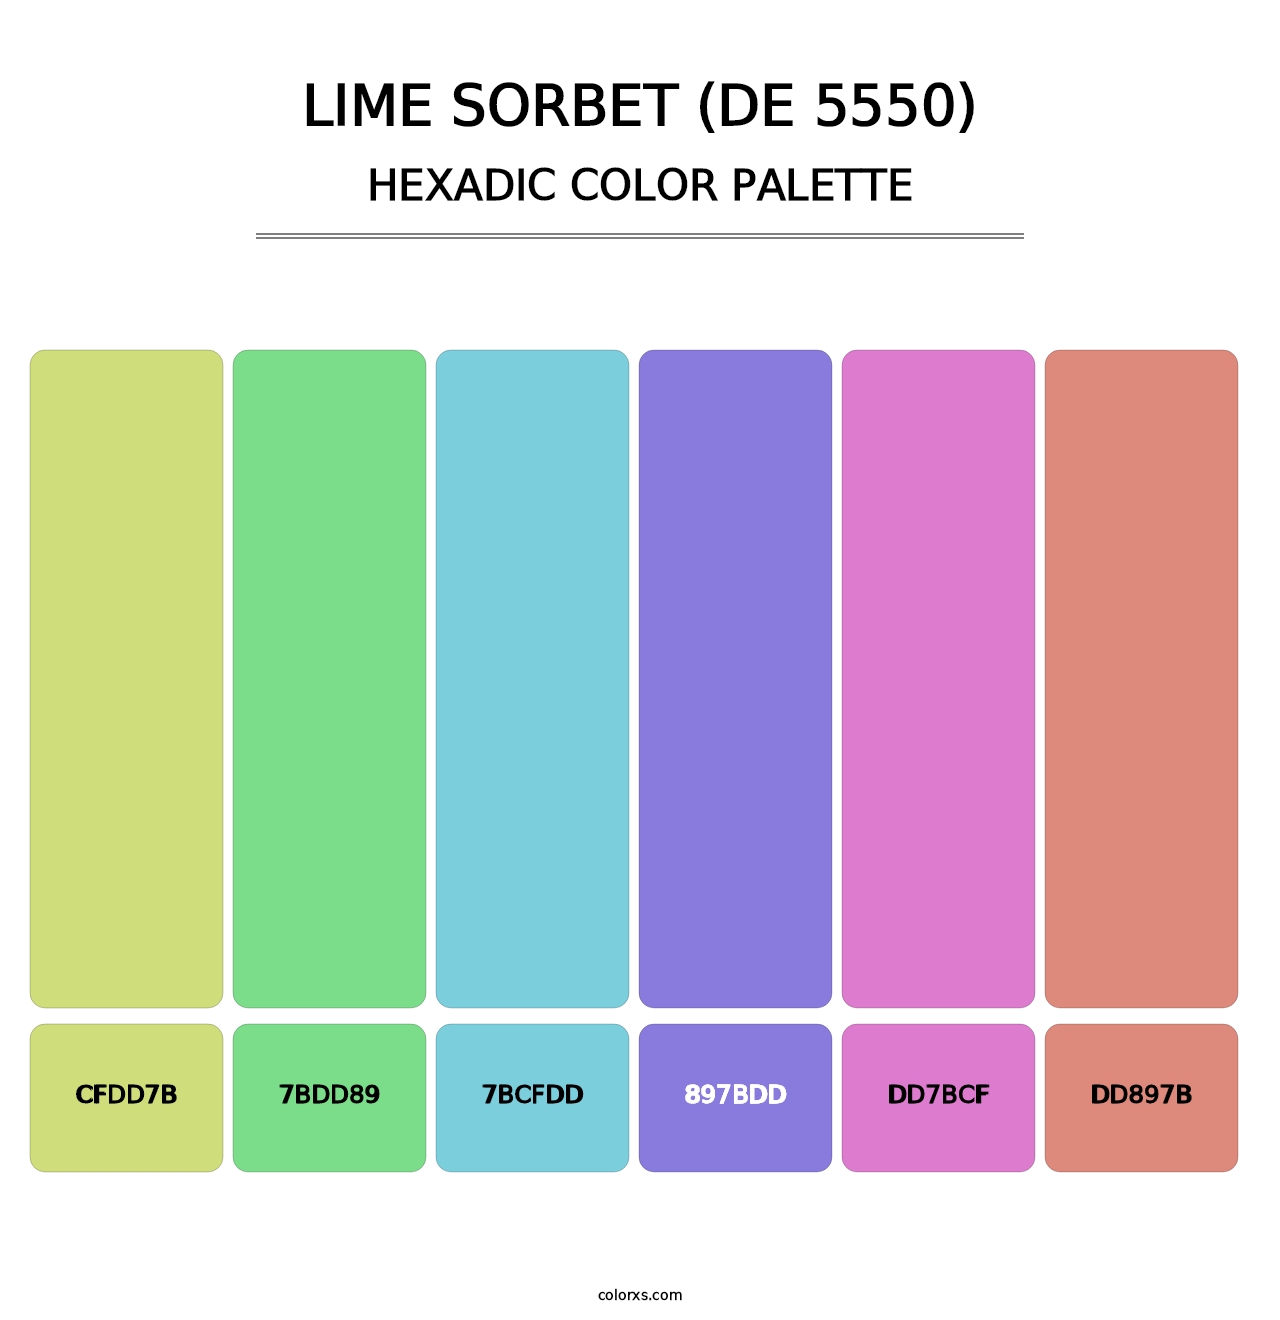 Lime Sorbet (DE 5550) - Hexadic Color Palette